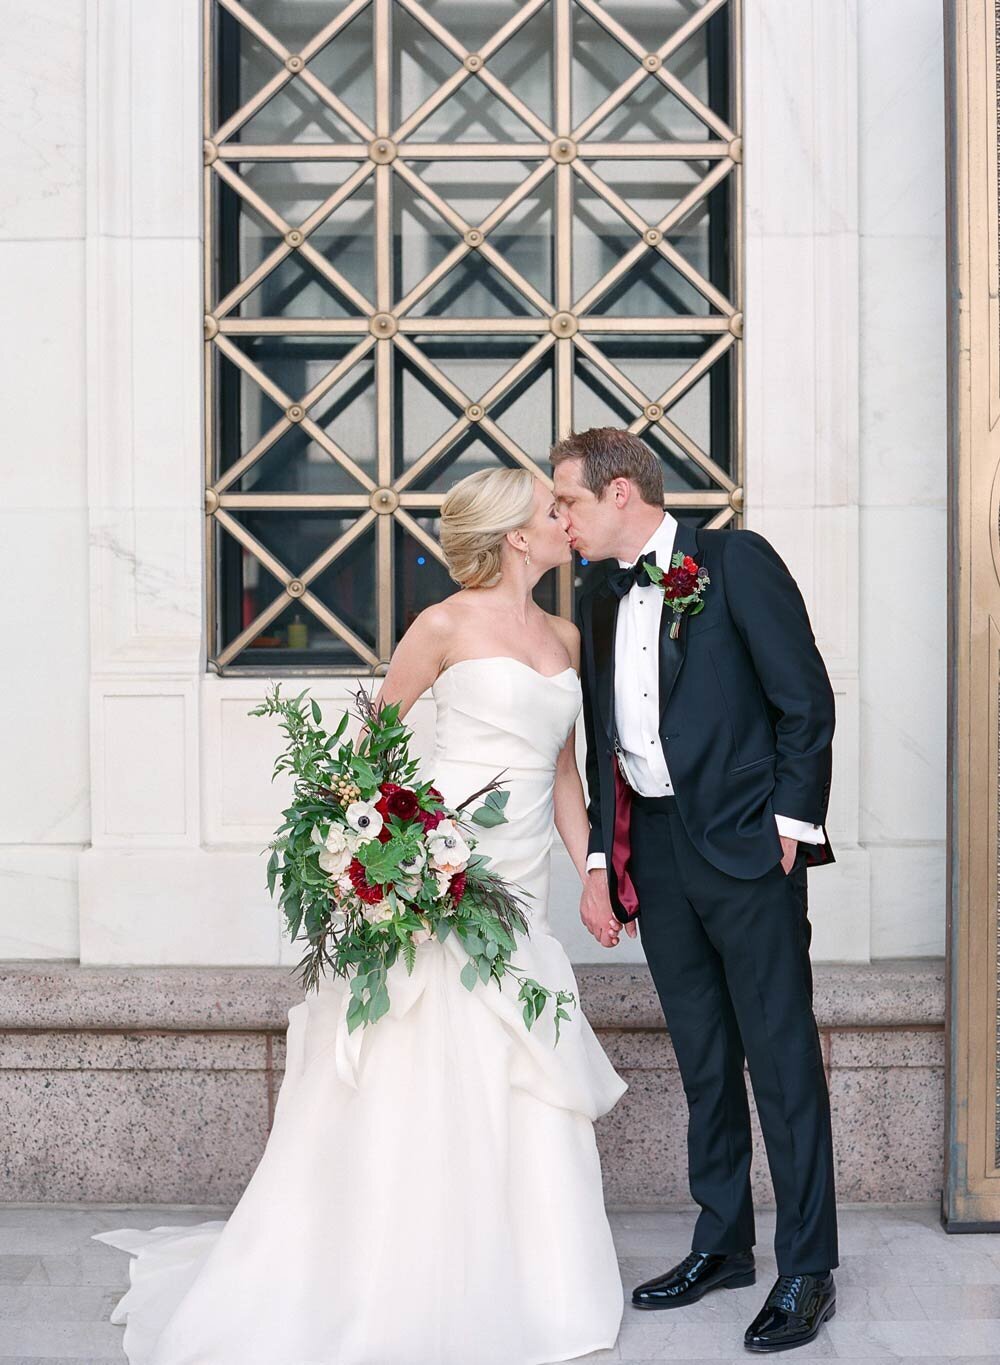 Bride and groom sharing a kiss at a black tie wedding in Denver, Colorado